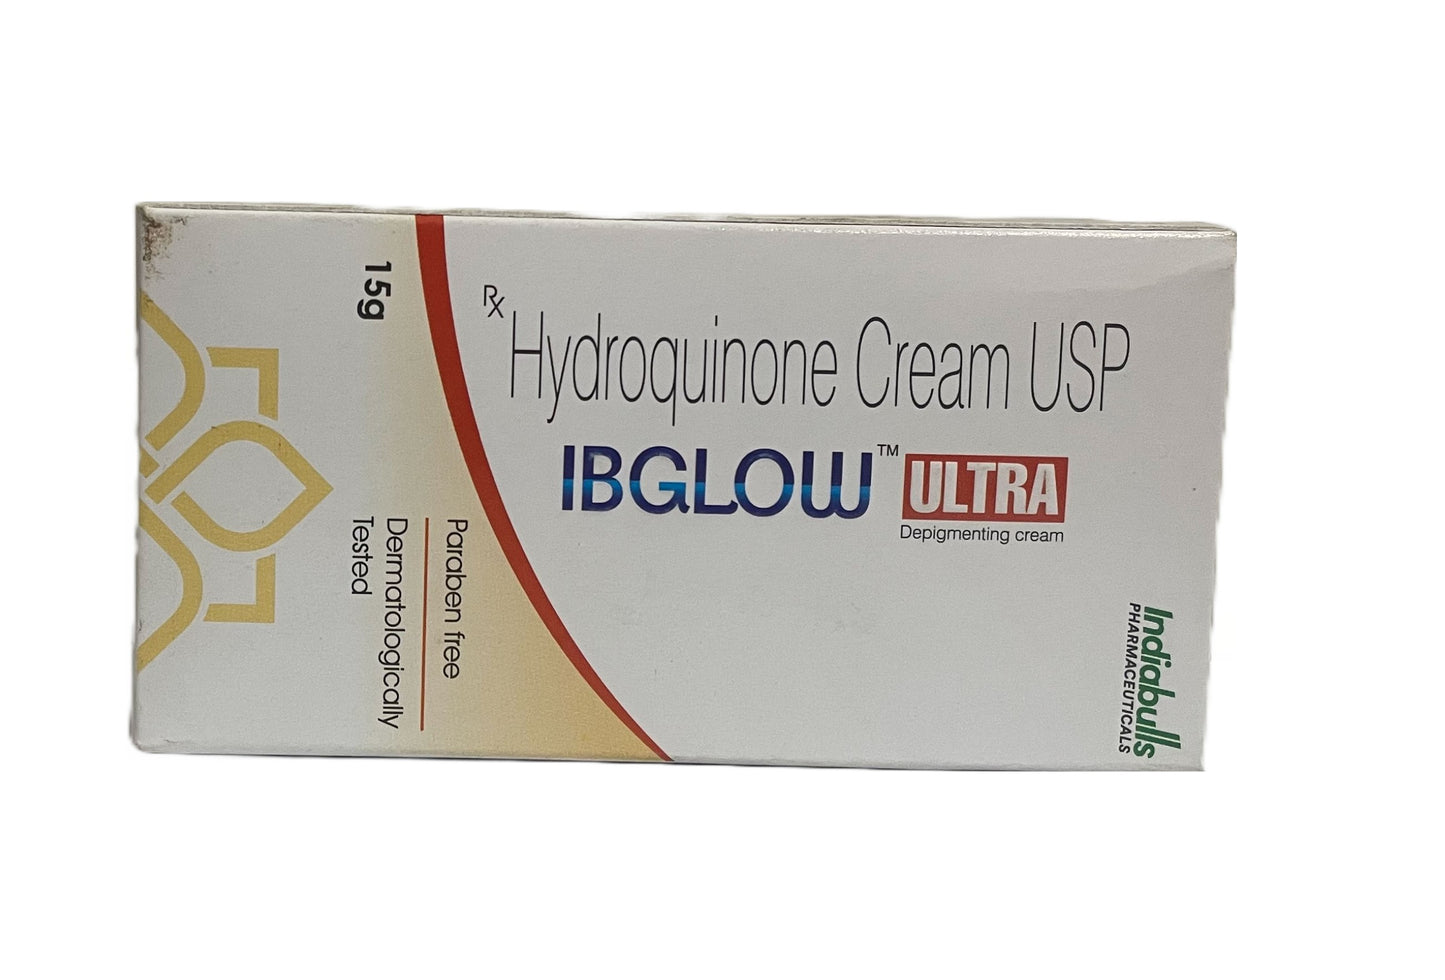 IbGlow Ultra Depigmenting Cream